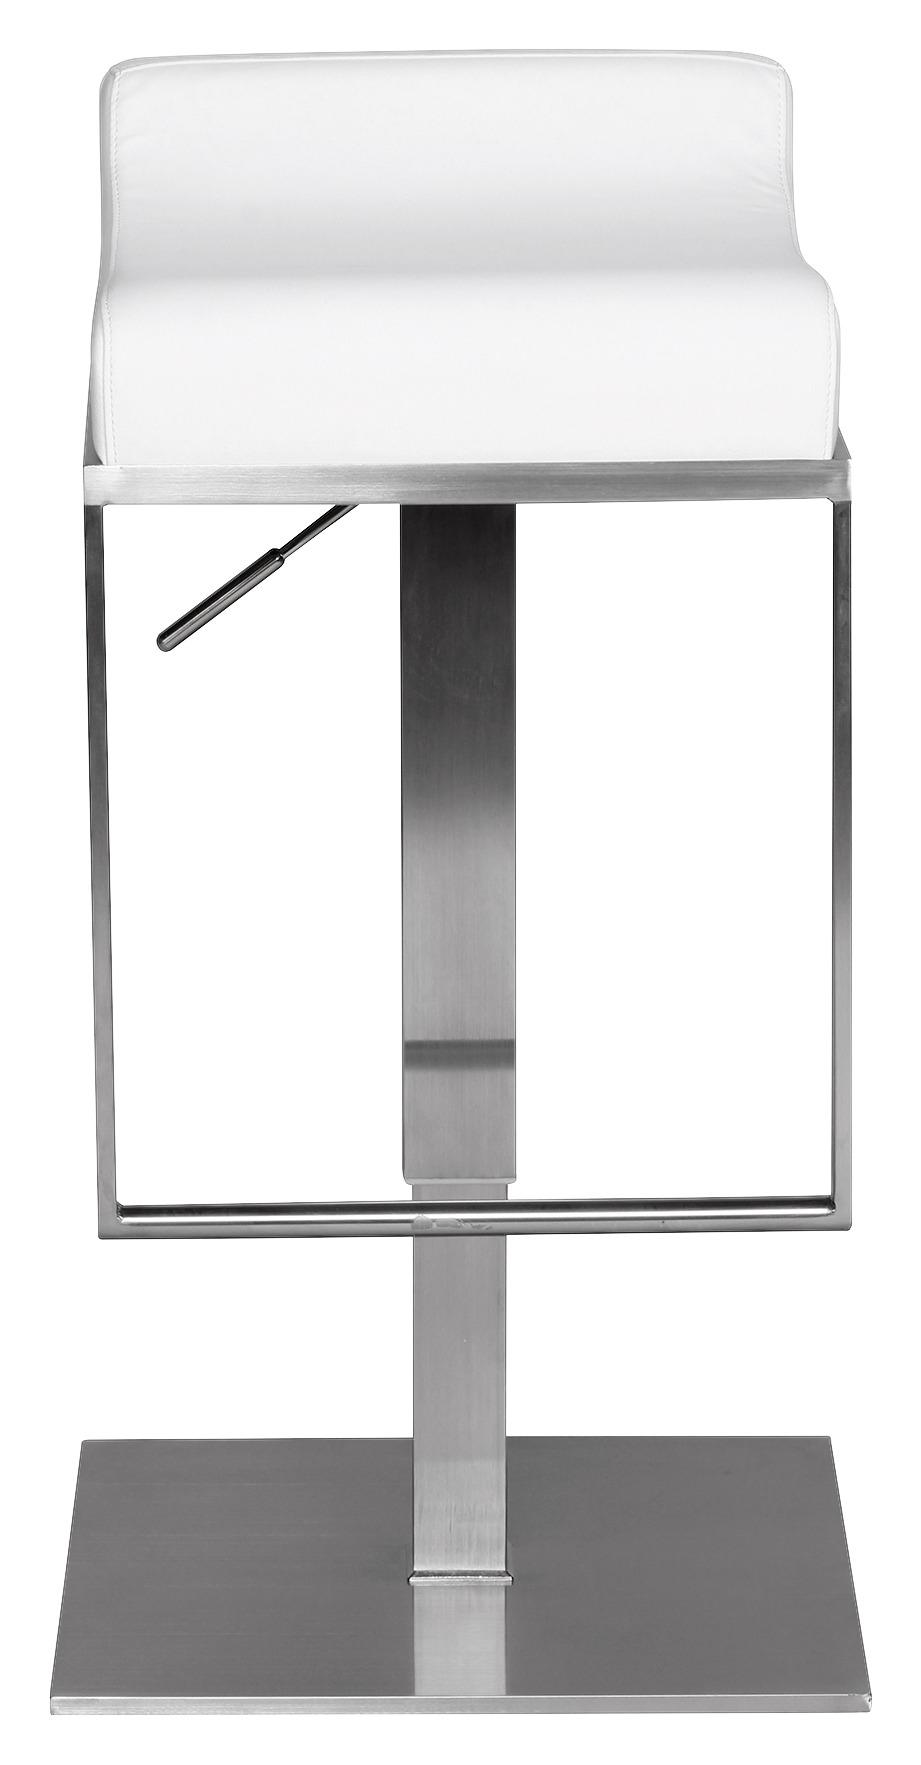 Barová Židle Barhocker Bílá - bílá/barvy stříbra, Moderní, kov/textil (42/65/42cm) - MID.YOU